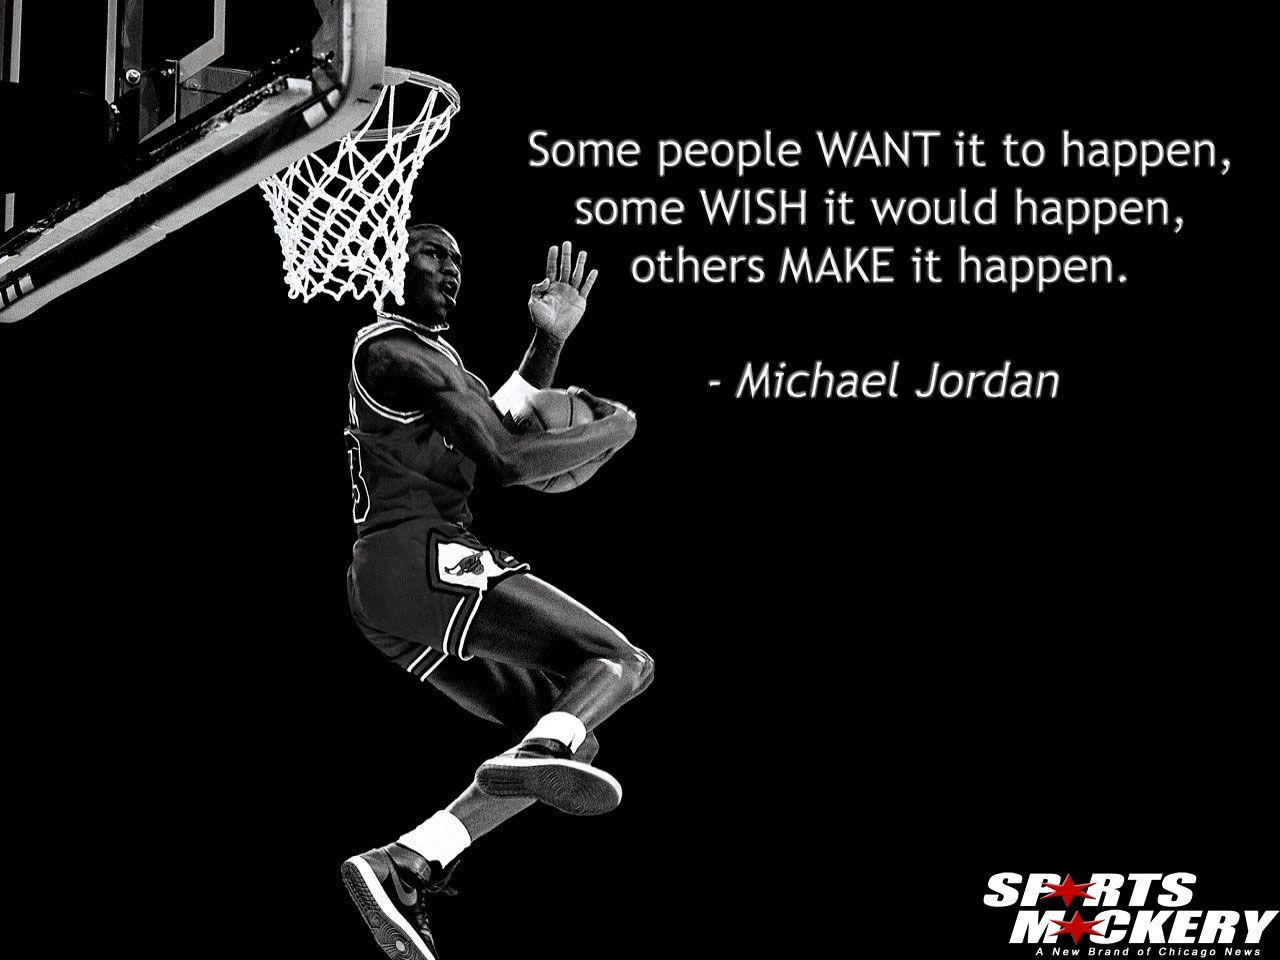 Michael Jordan Quotes Wallpaper QuotesGram